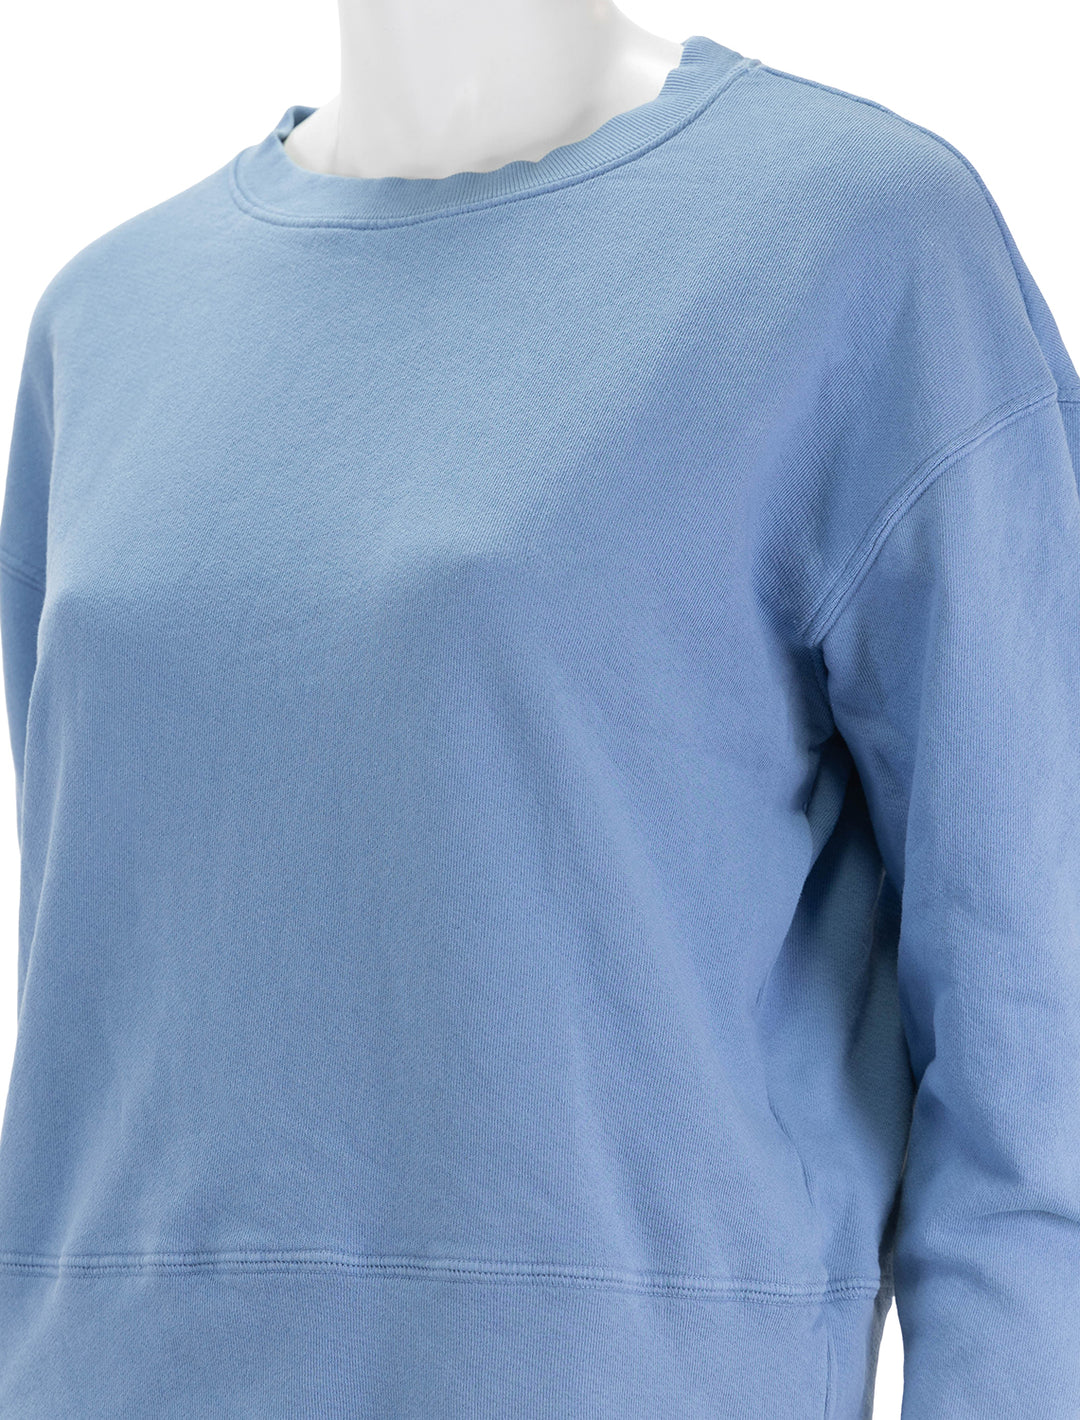 Close-up view of Perfectwhitetee's tyler sweatshirt in caroline blue.